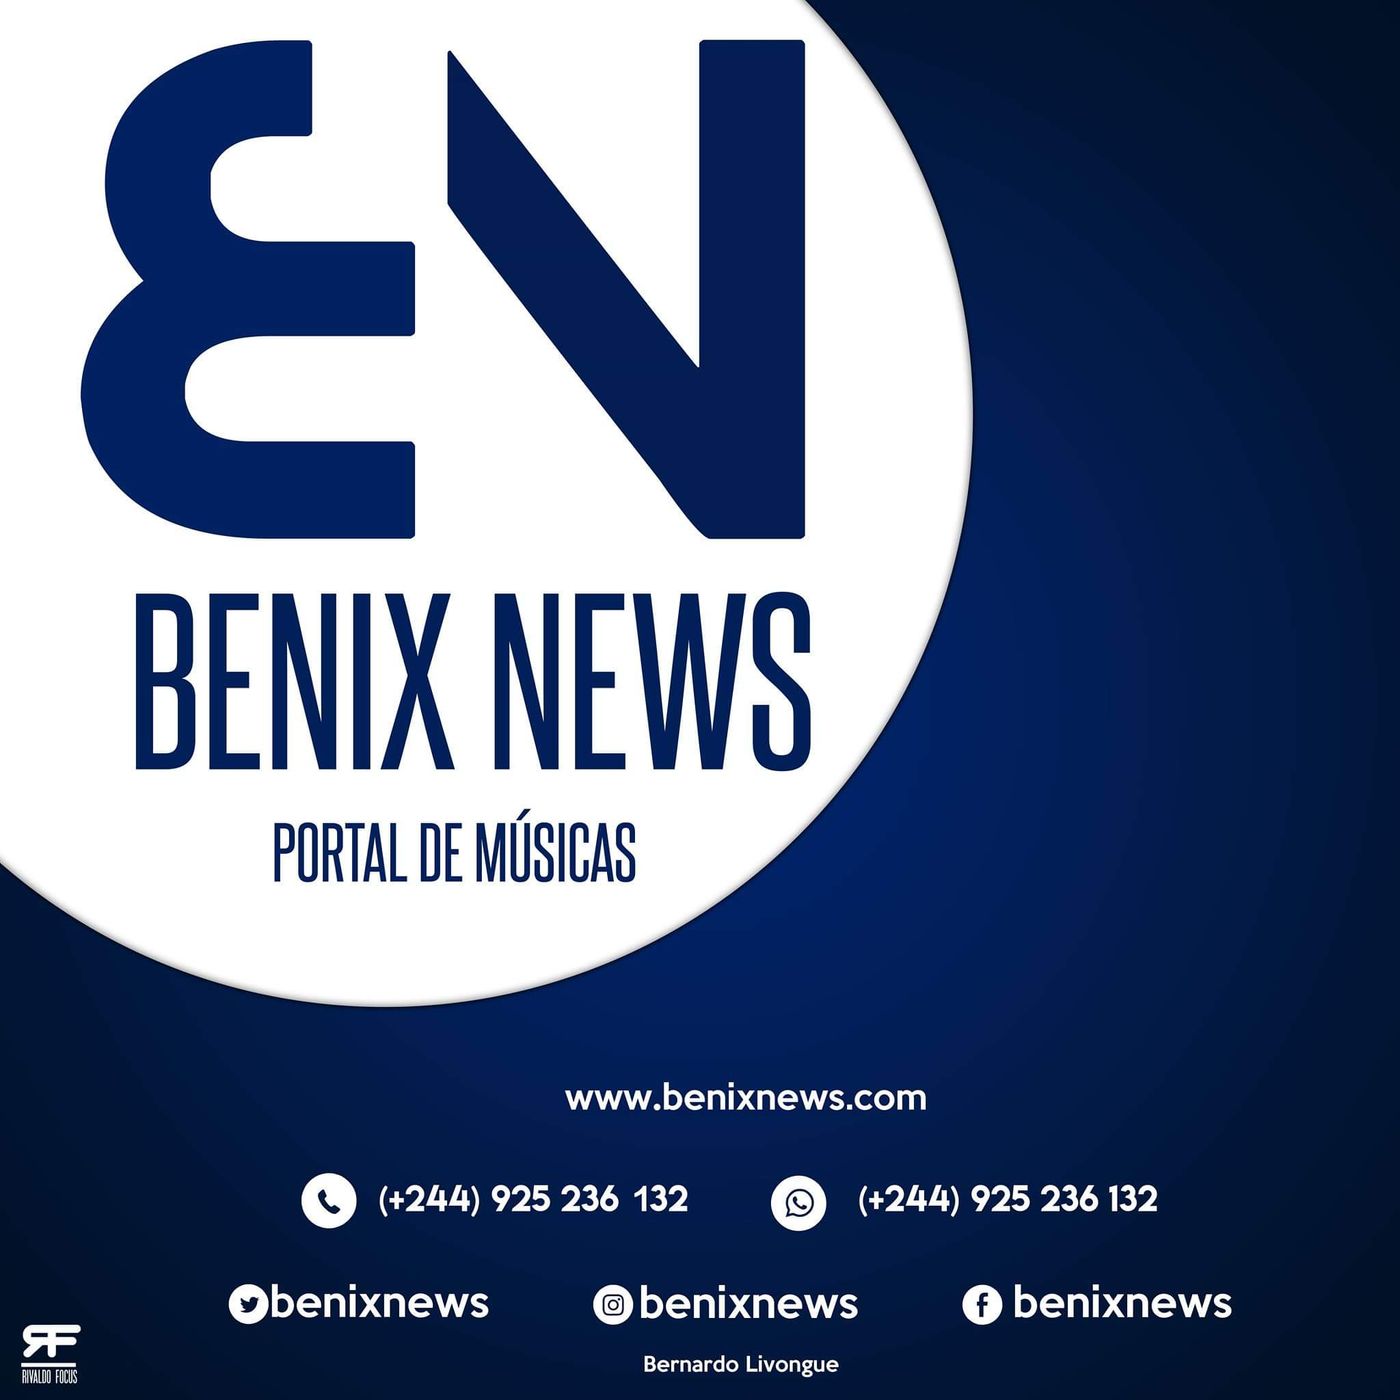 Benix News